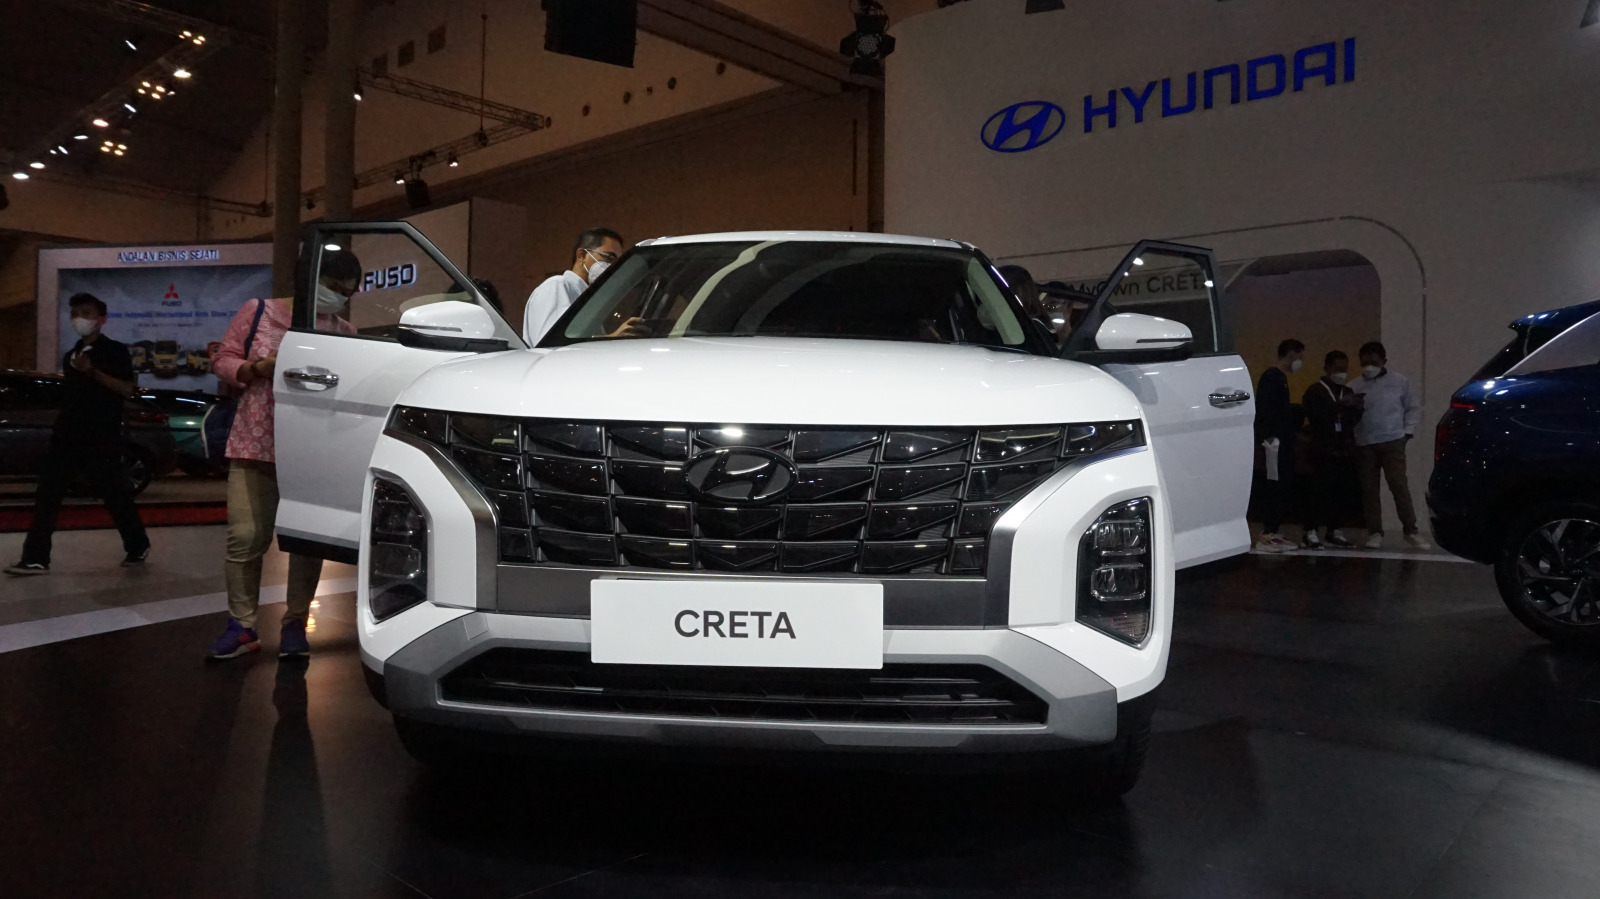 PT Hyundai Motors Indonesia Kamis (11/11/2021) meluncurkan Hyundai CRETA, lini SUV terbaru pada pergelaran Gaikindo Indonesia International Auto Show (GIIAS) 2021.